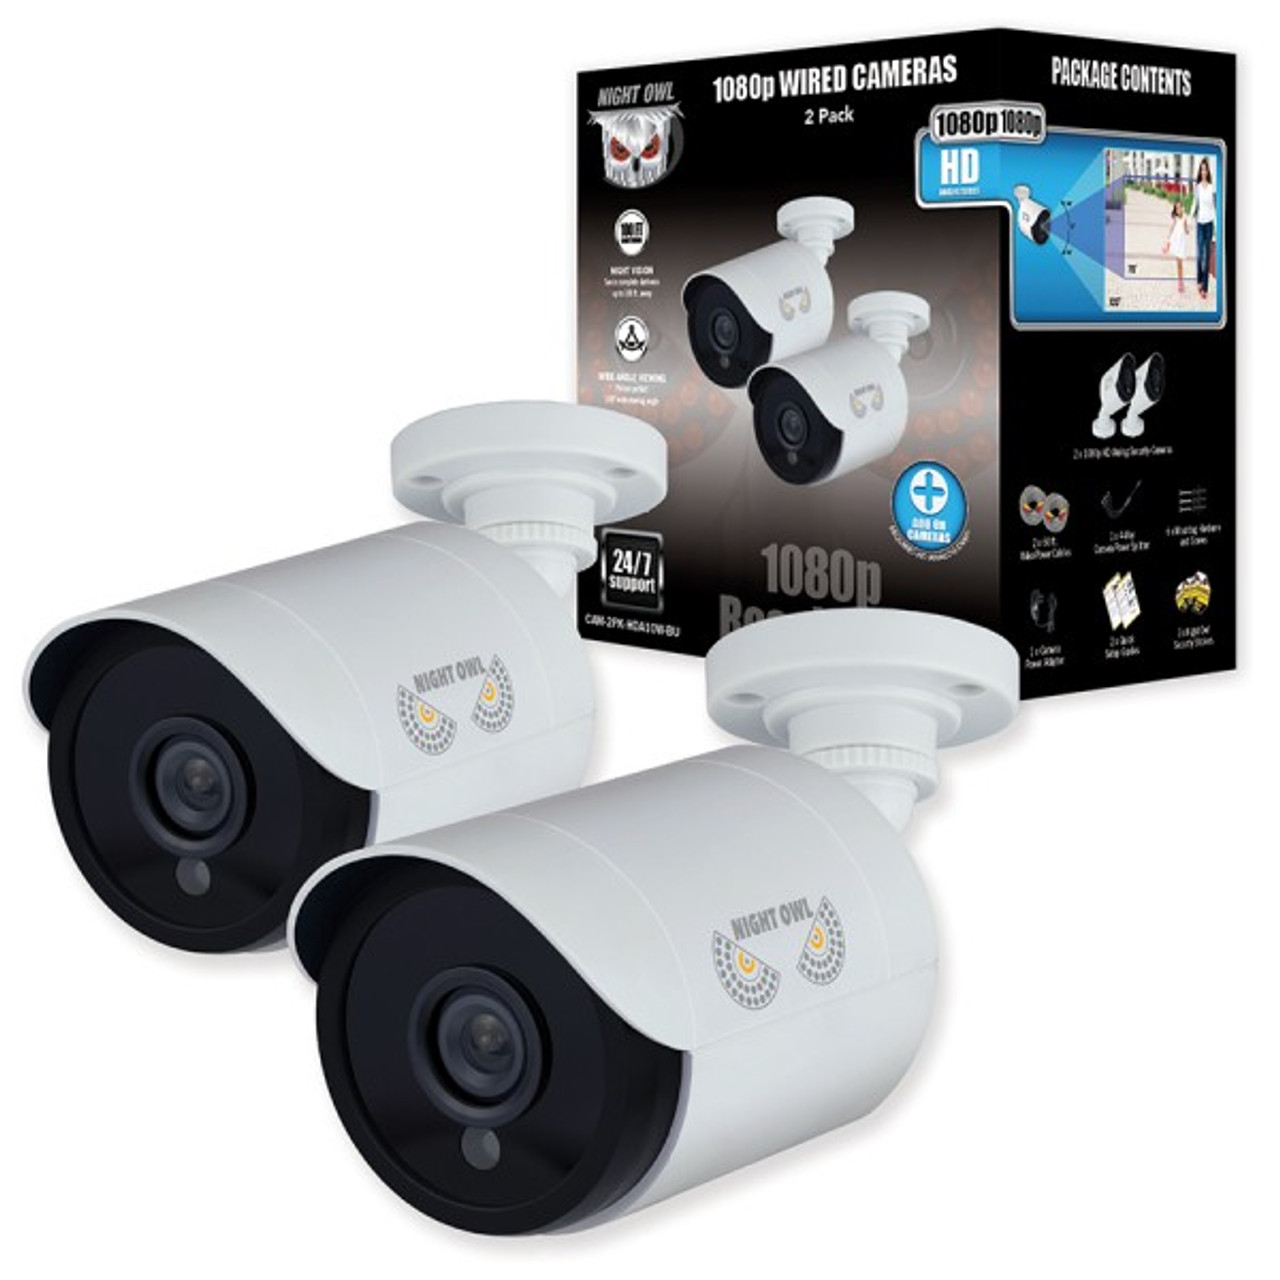 night owl camera system wireless